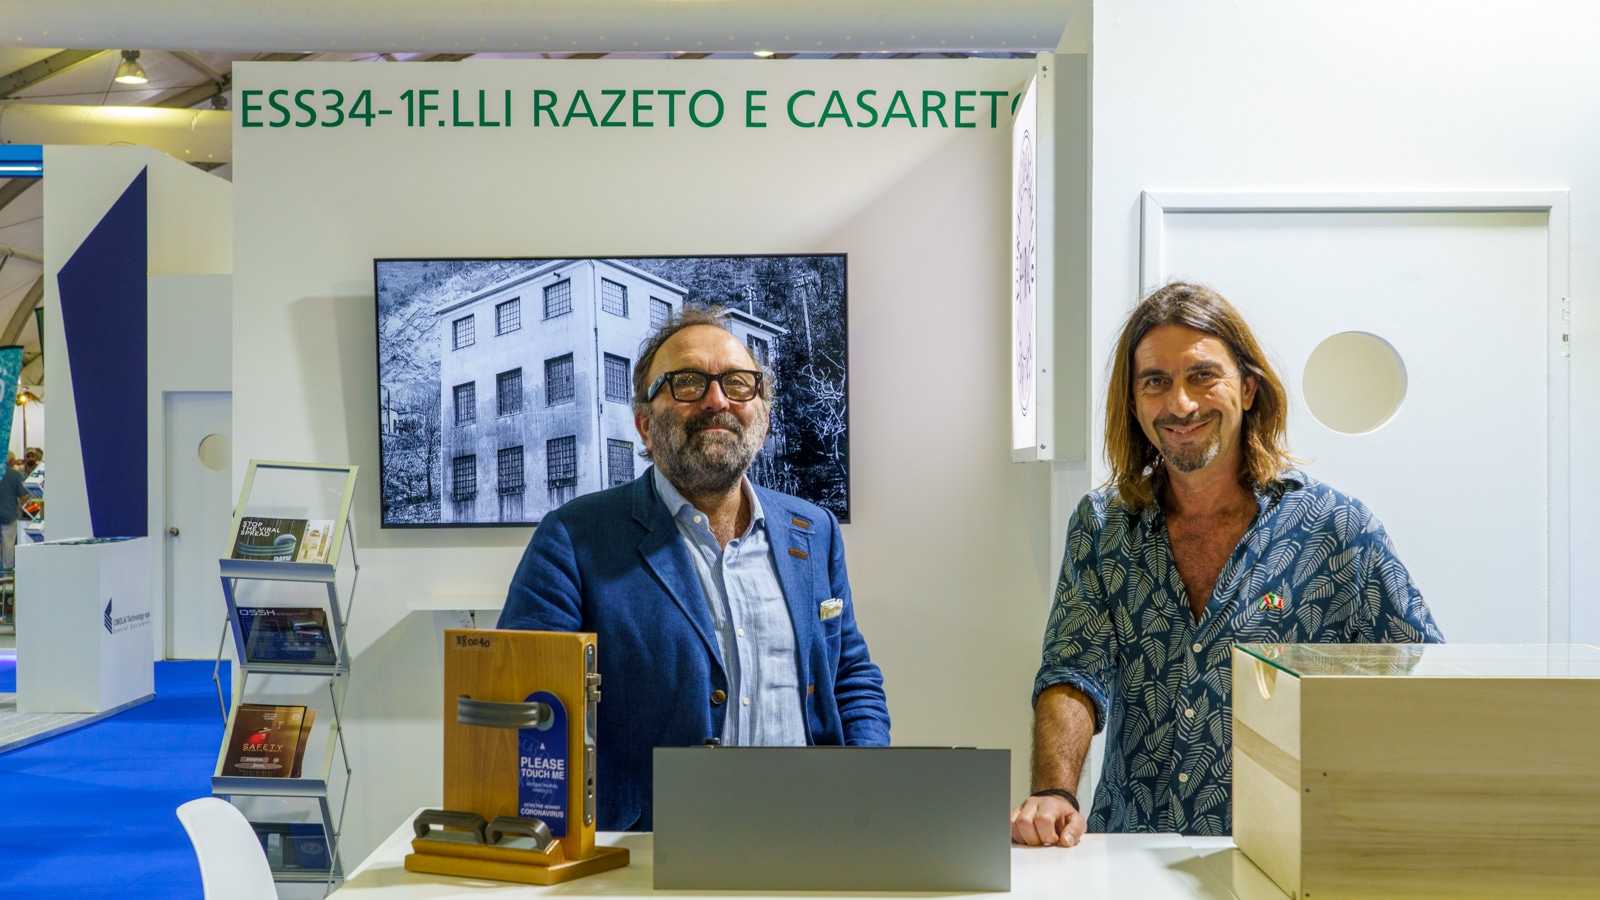 F.lli Razeto &Casareto at DIBS with the new Quadra5Led handle: elegant and safe